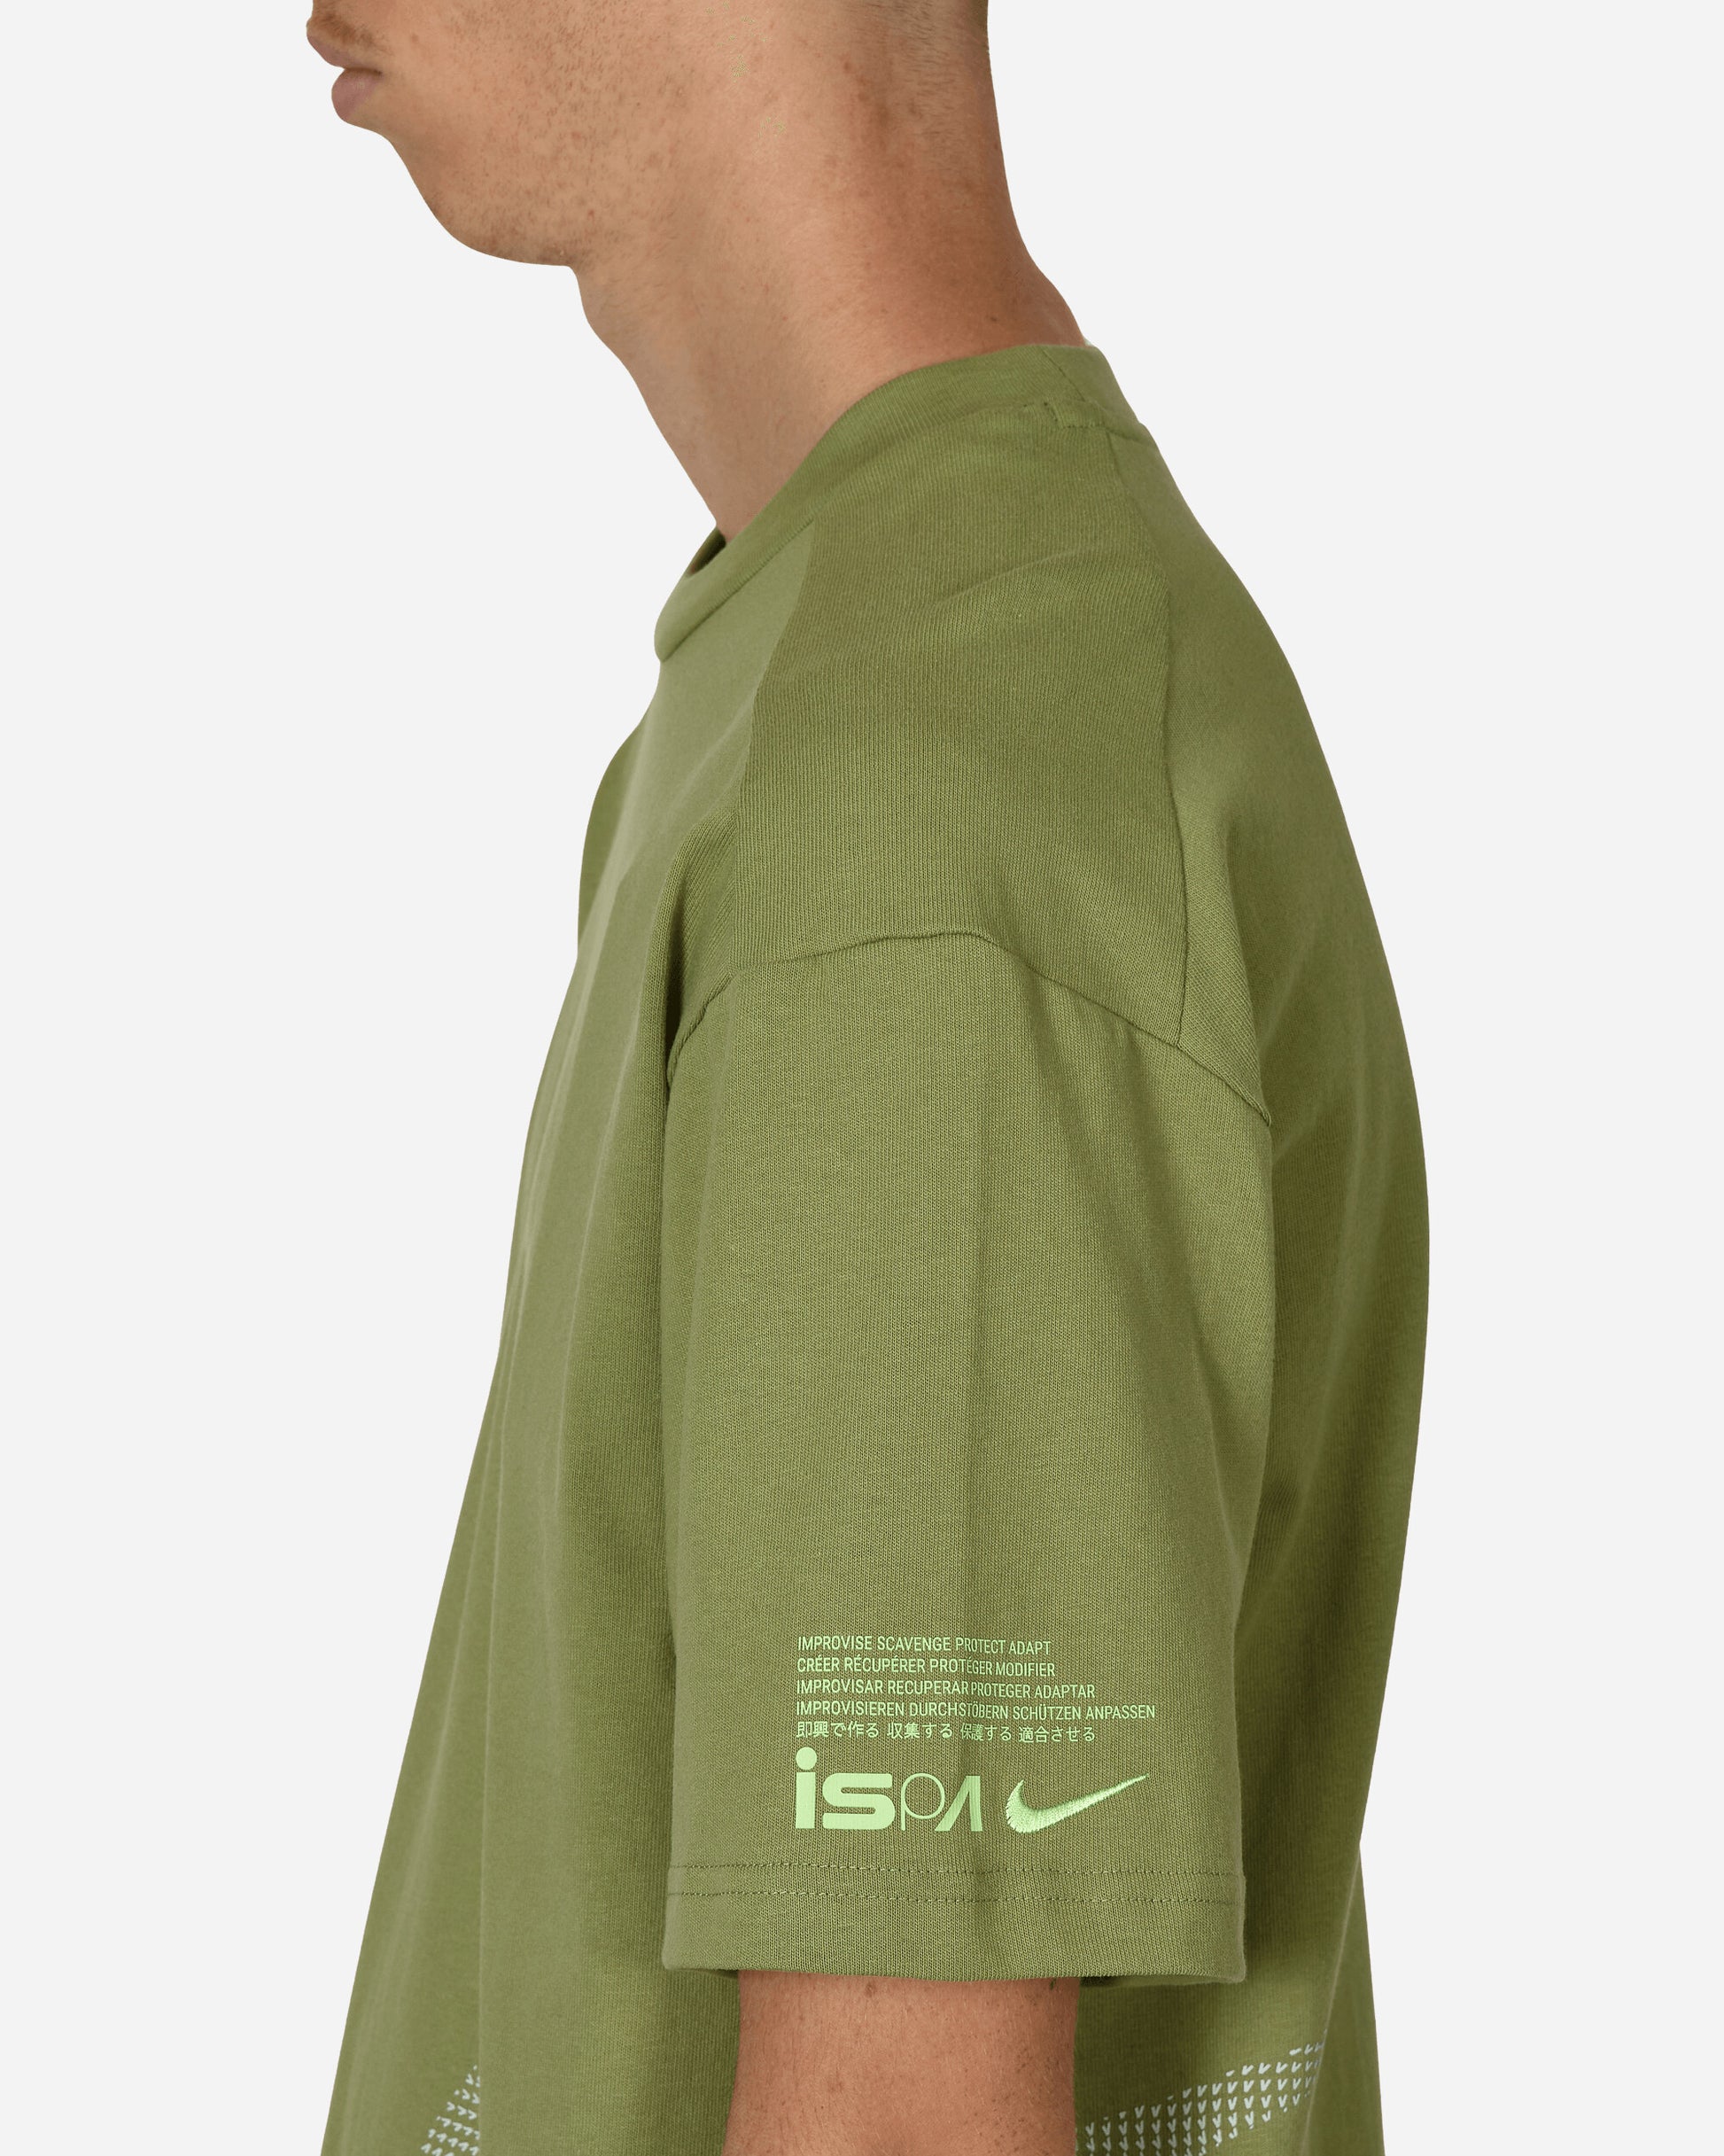 Nike U Nrg Ispa Ssnl Ss Tee Alligator/Ghost Green T-Shirts Shortsleeve FD7856-334